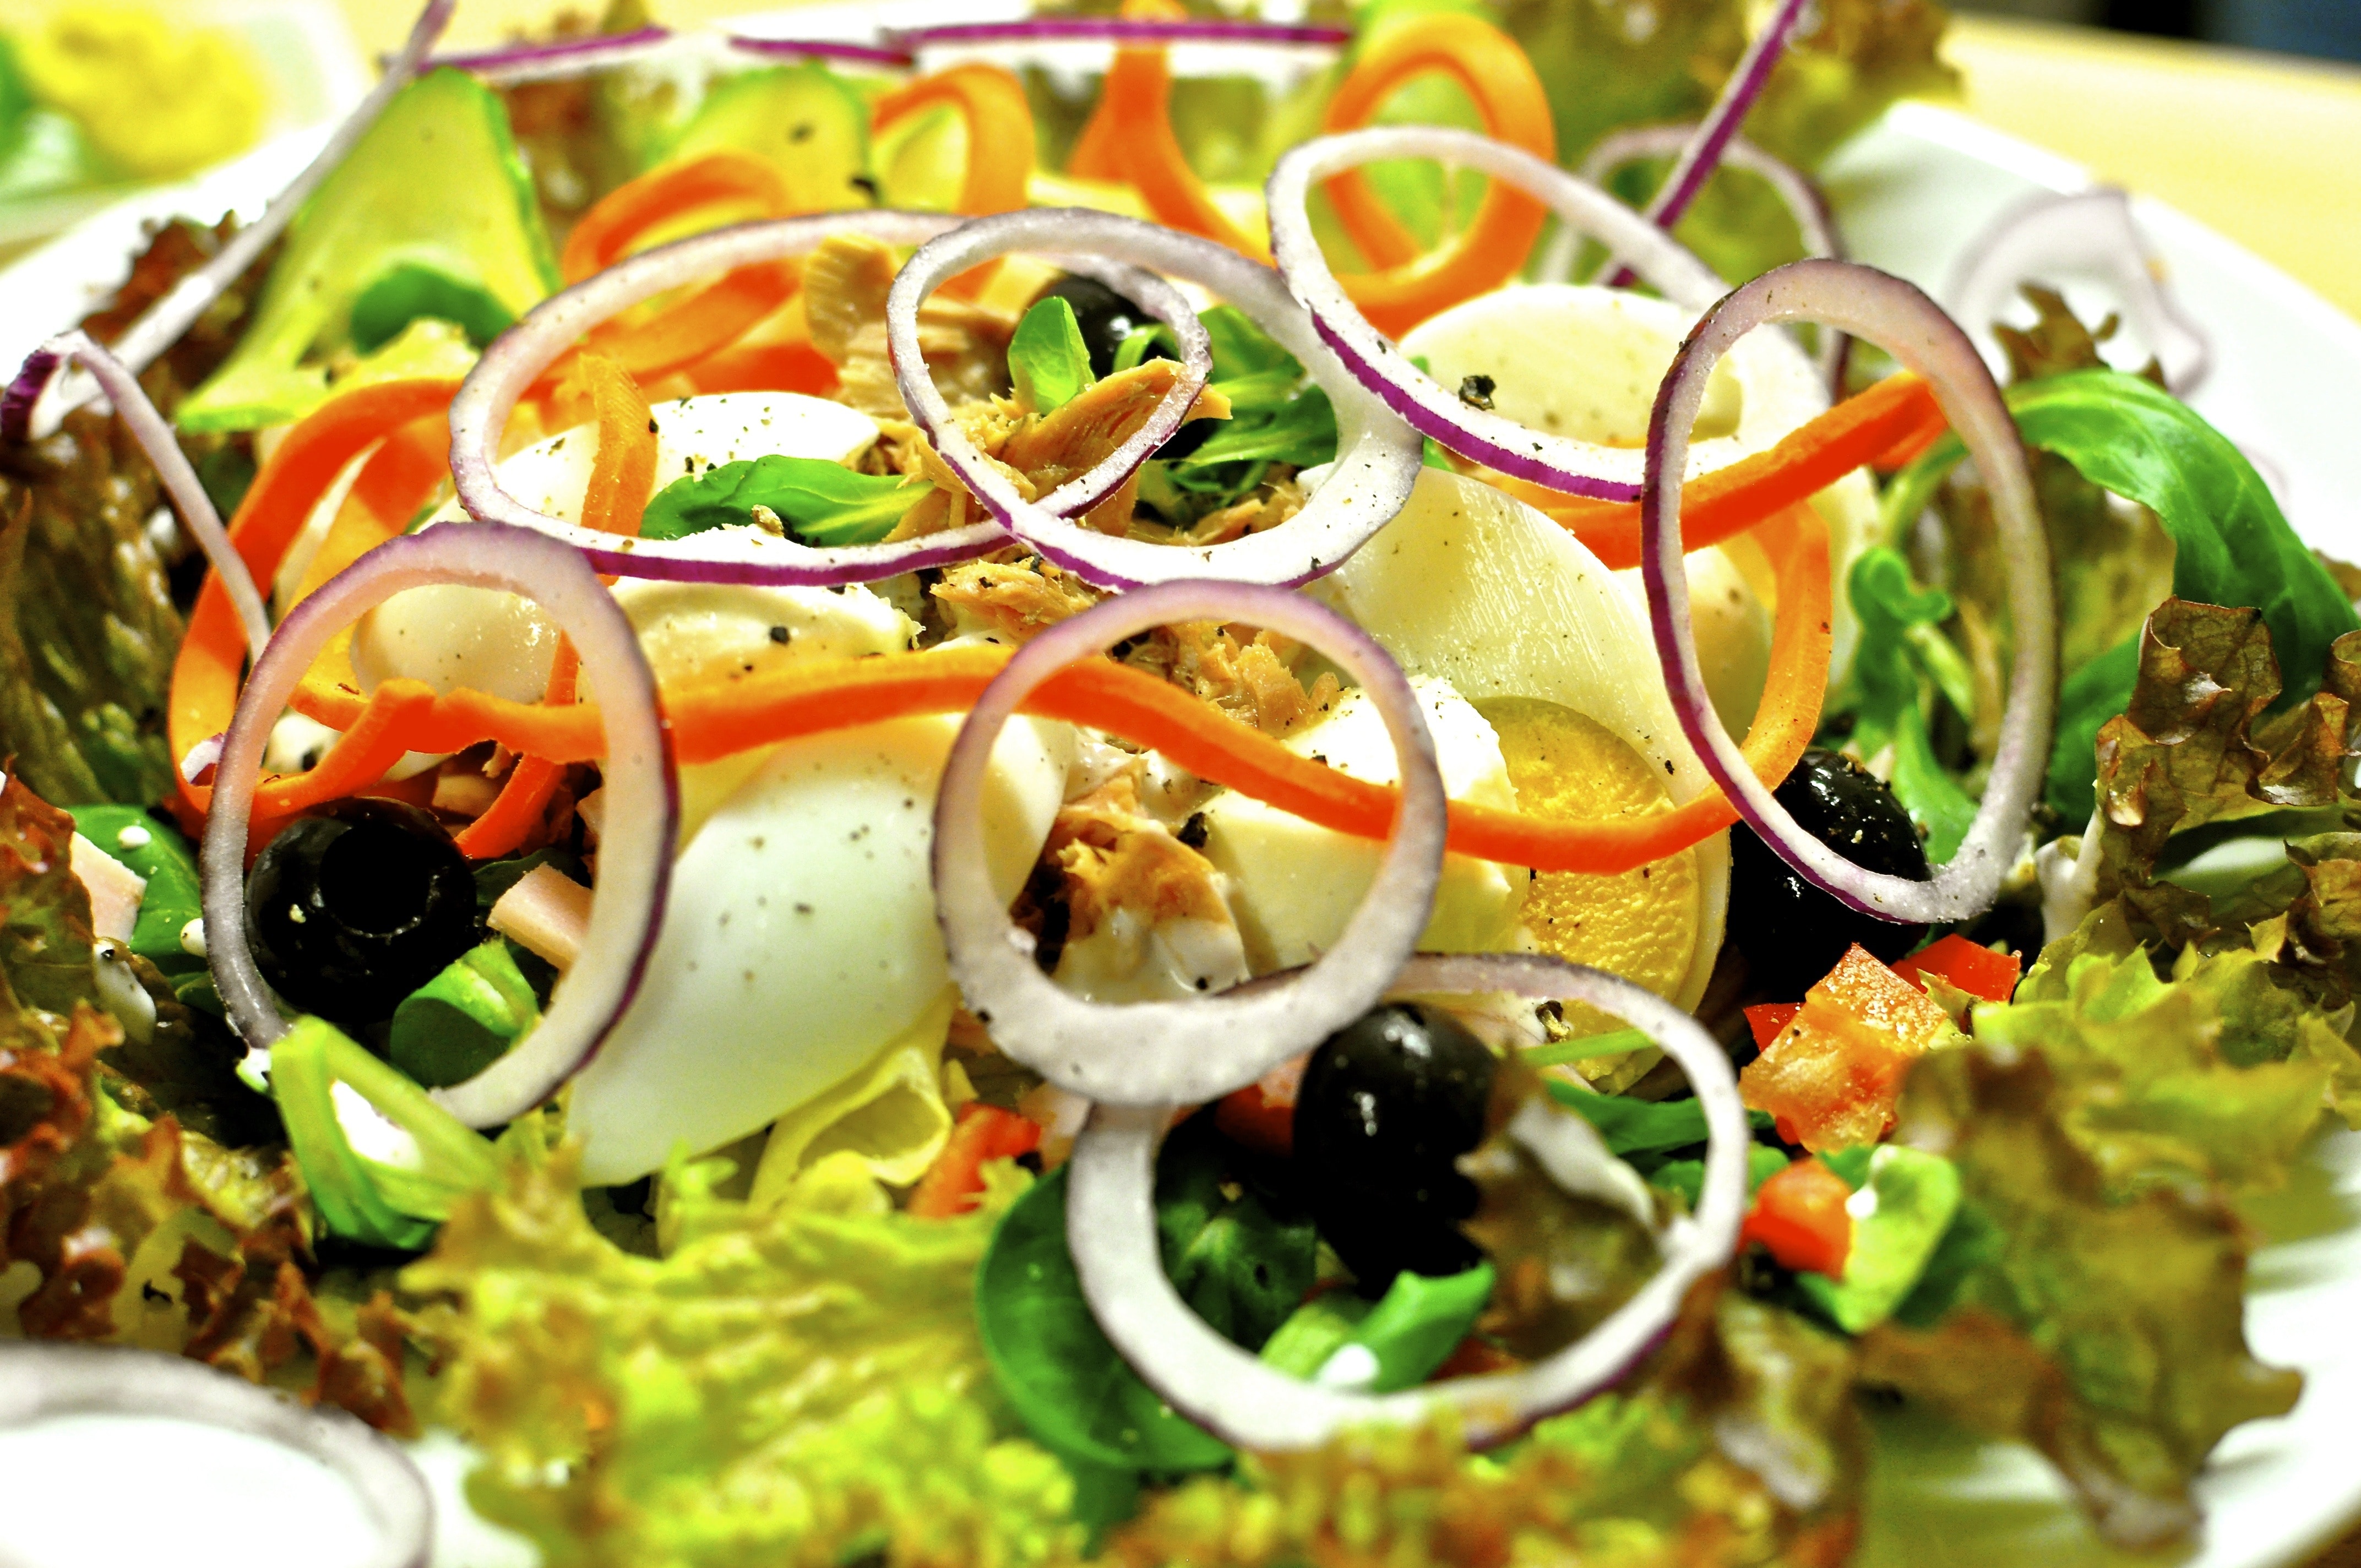 Healthy, Vitamins, Salad Plate, Salad, food and drink, close-up